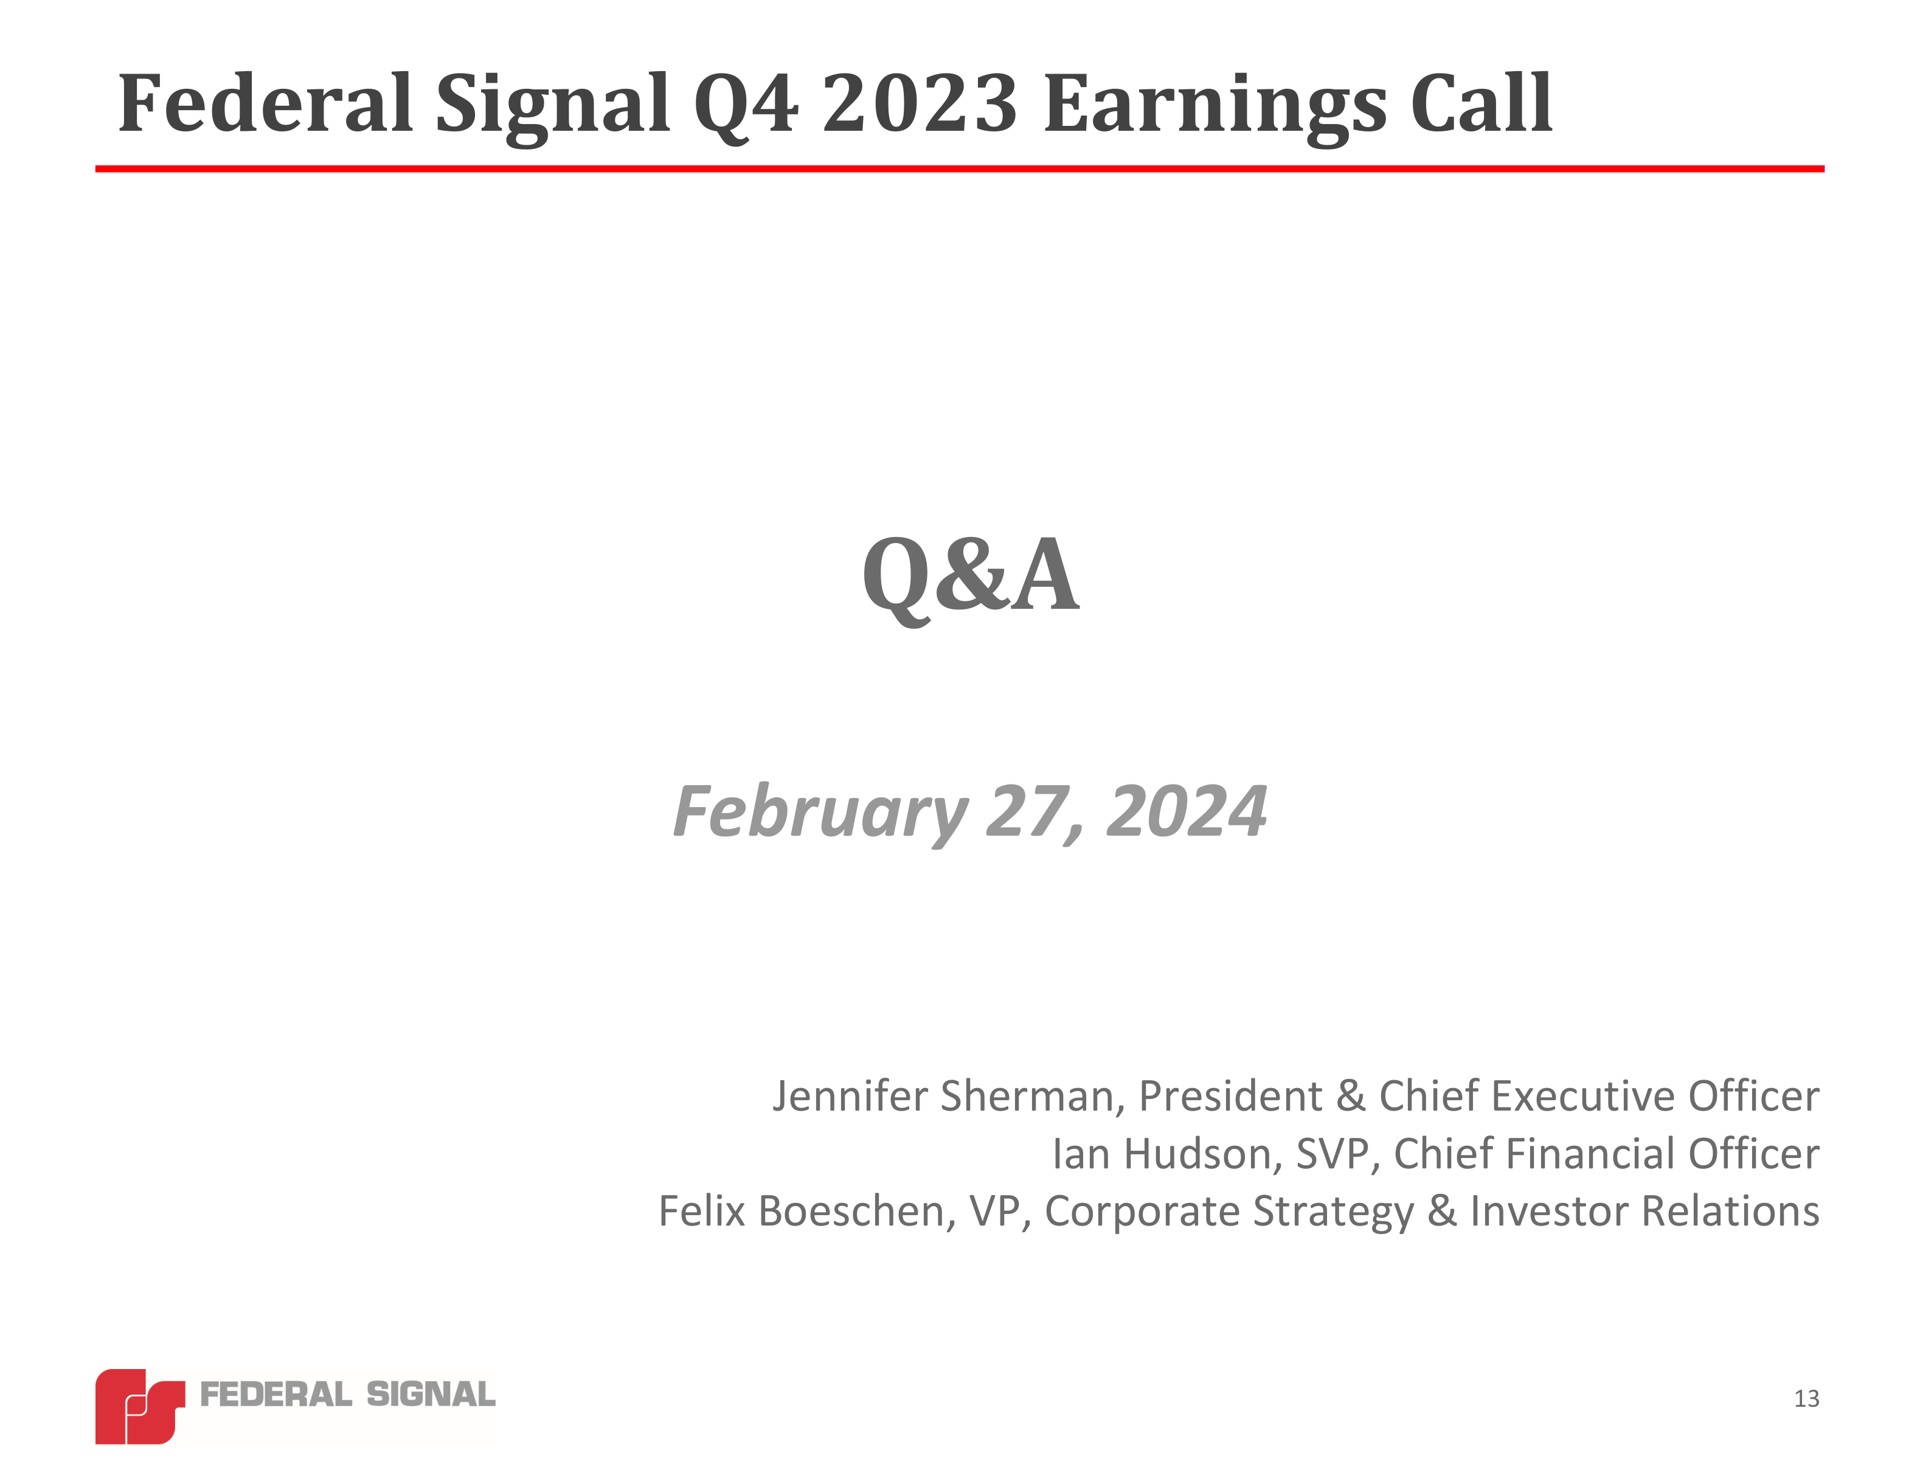 federal signal earnings call a | Federal Signal